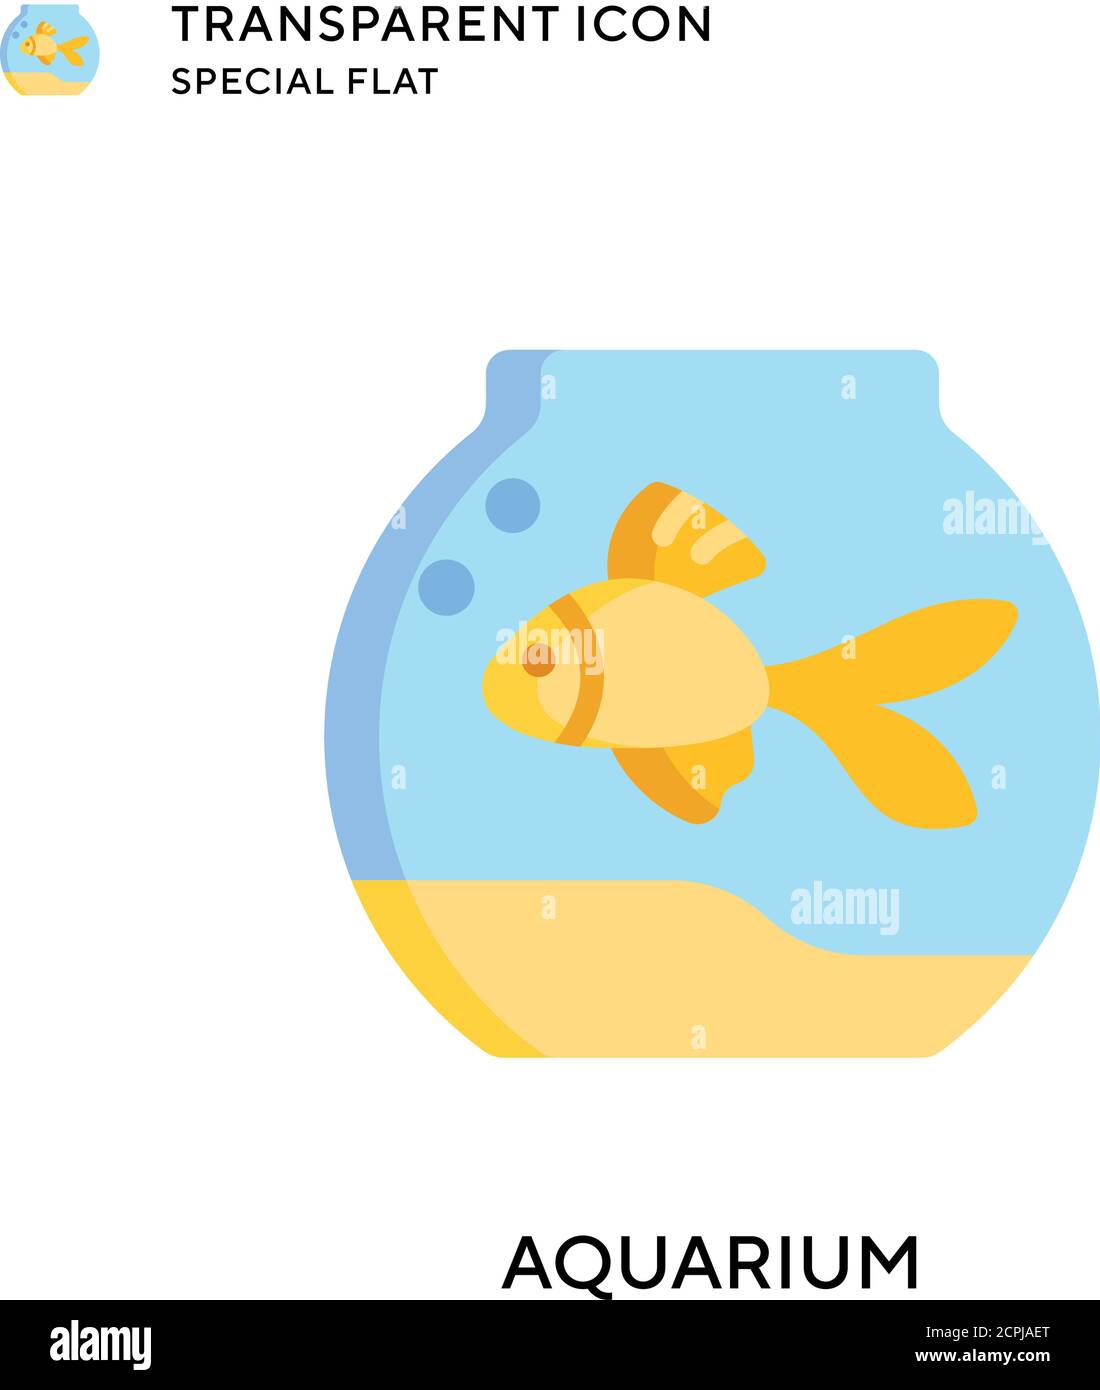 Aquarium vector icon. Flat style illustration. EPS 10 vector. Stock Vector